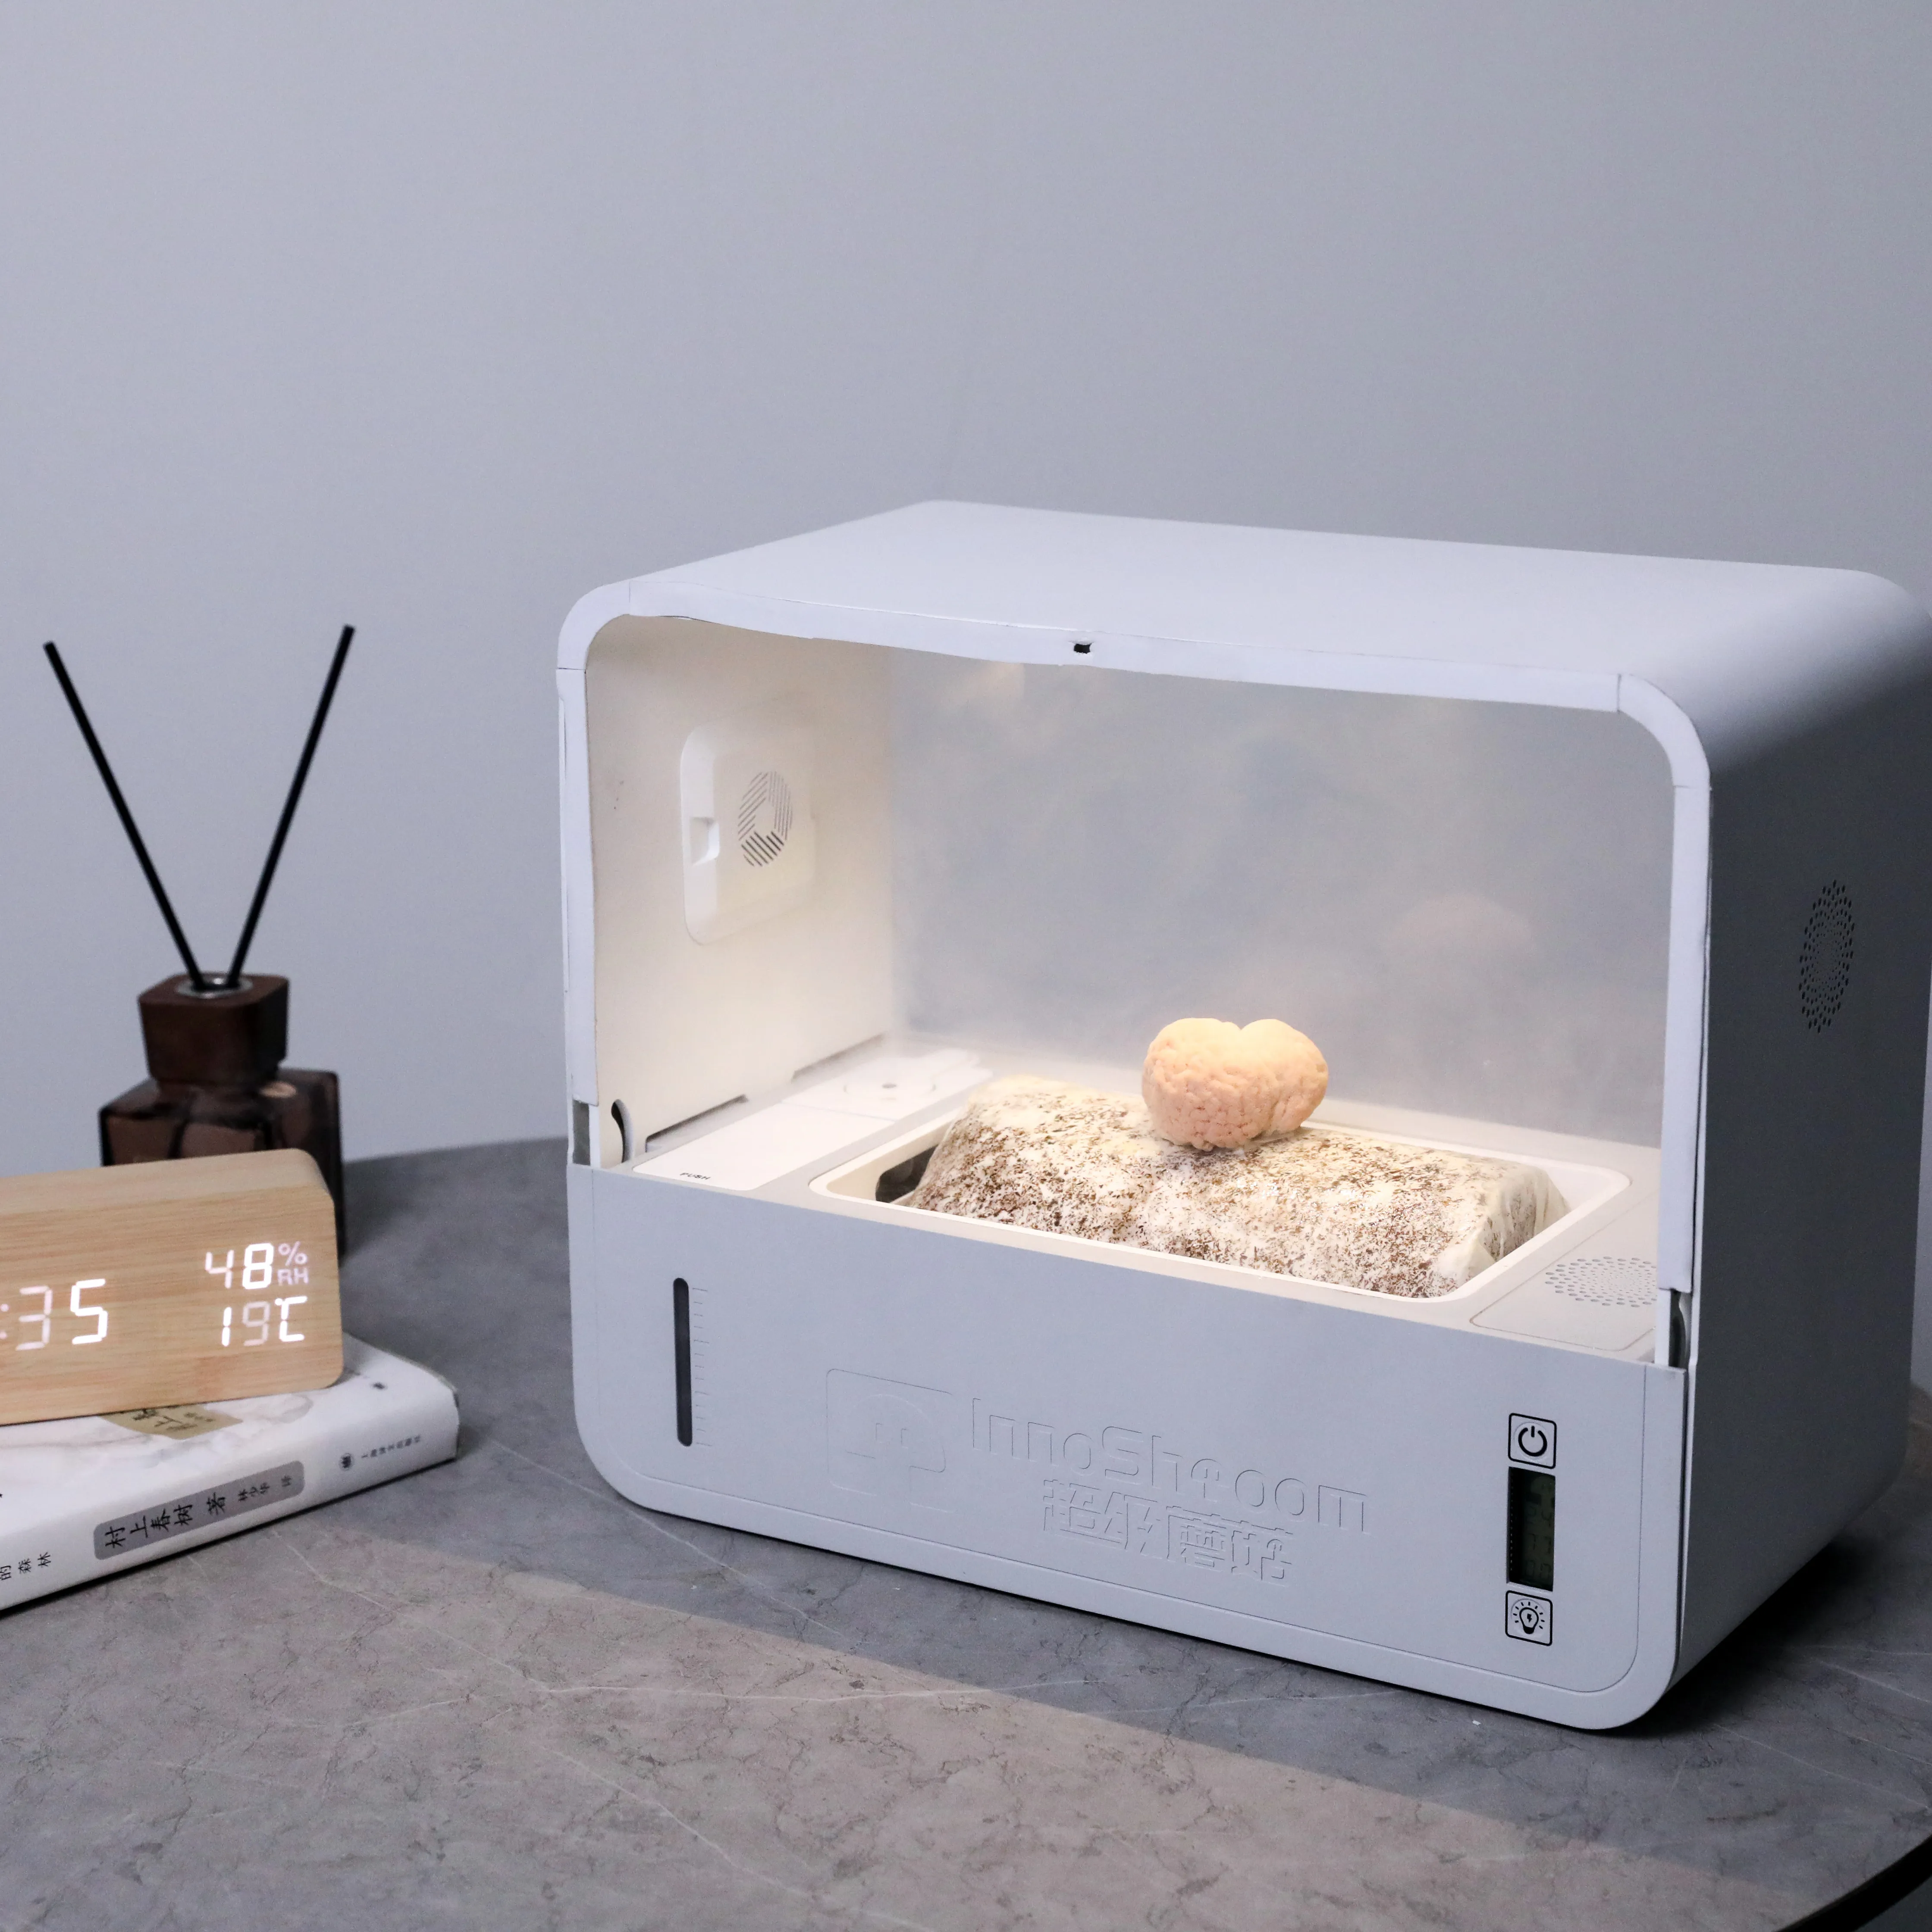 Sistem Tanam cerdas waktu otomatis, Kit pertumbuhan jamur dengan pompa cerdas rumah kaca Mini pintar jamur